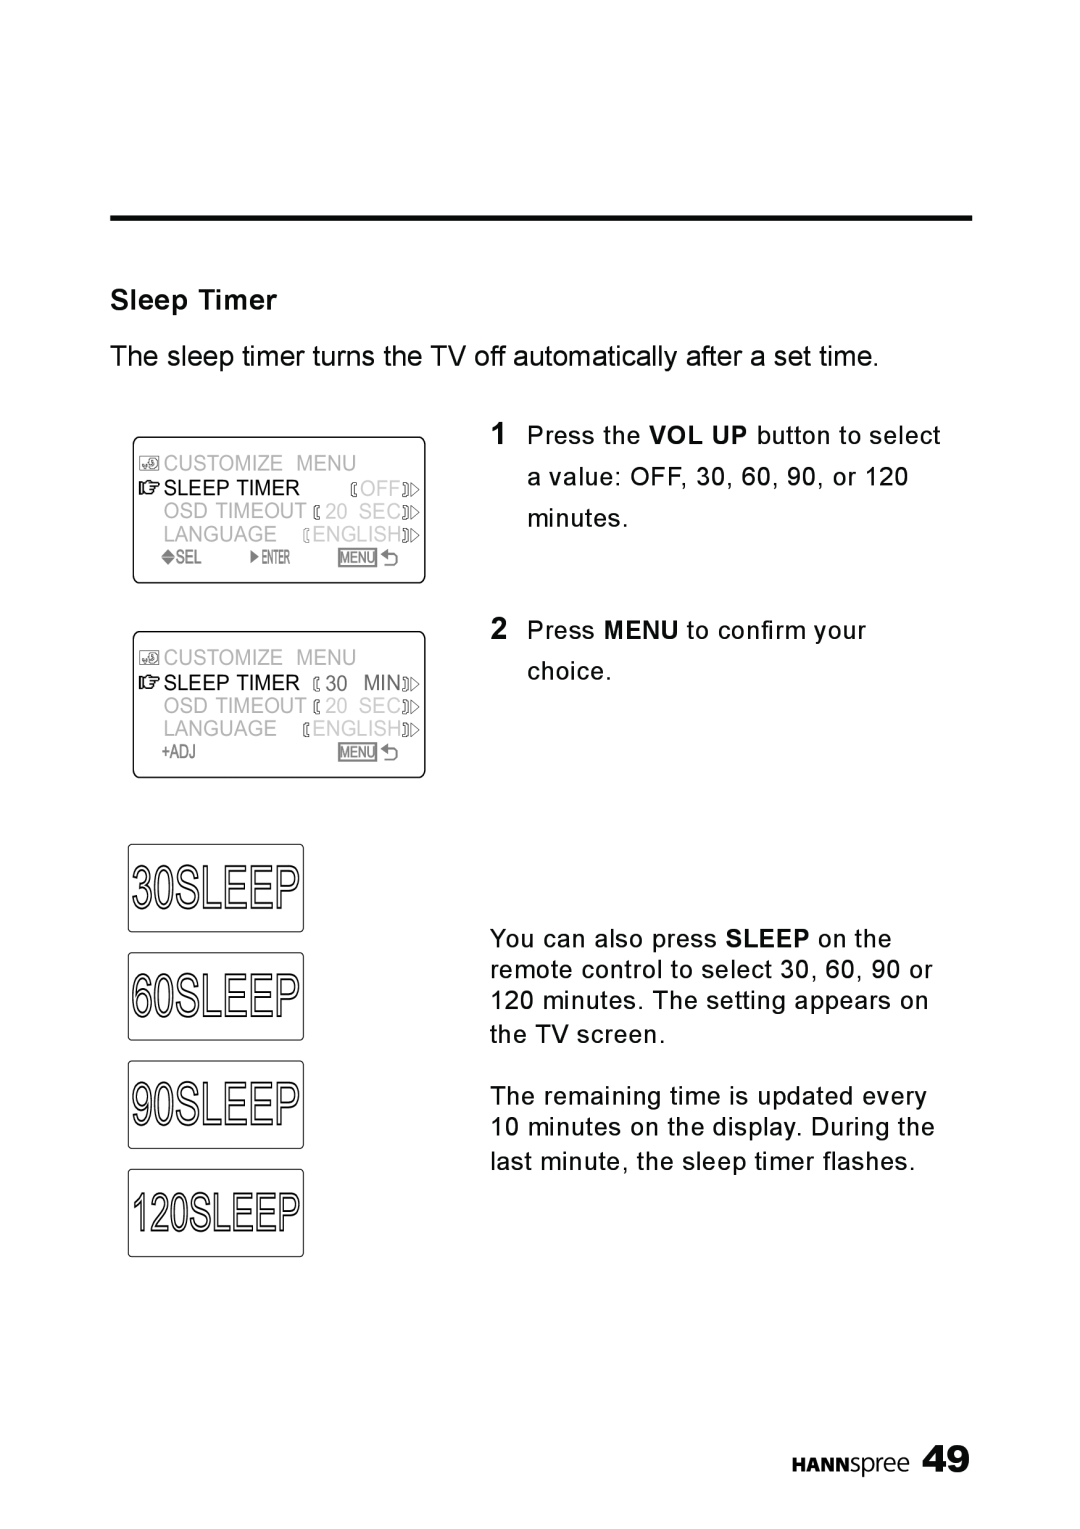 HANNspree ST09-10A1 user manual Sleep Timer, 30SLEEP 60SLEEP 90SLEEP, 120SLEEP 